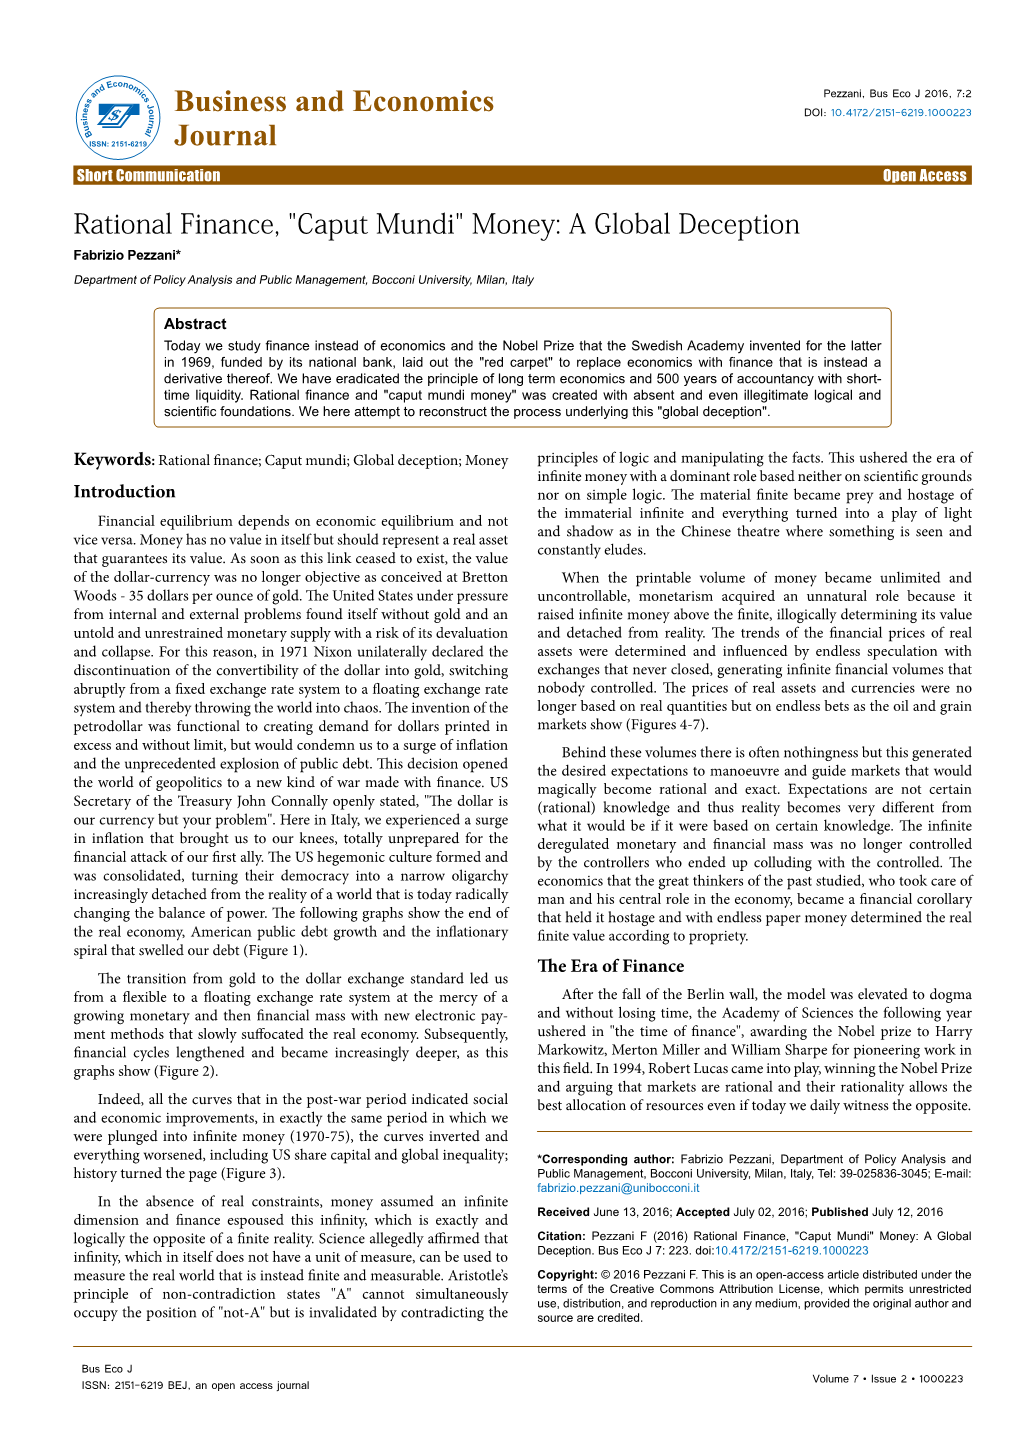 Rational Finance, "Caput Mundi" Money: a Global Deception Fabrizio Pezzani* Department of Policy Analysis and Public Management, Bocconi University, Milan, Italy